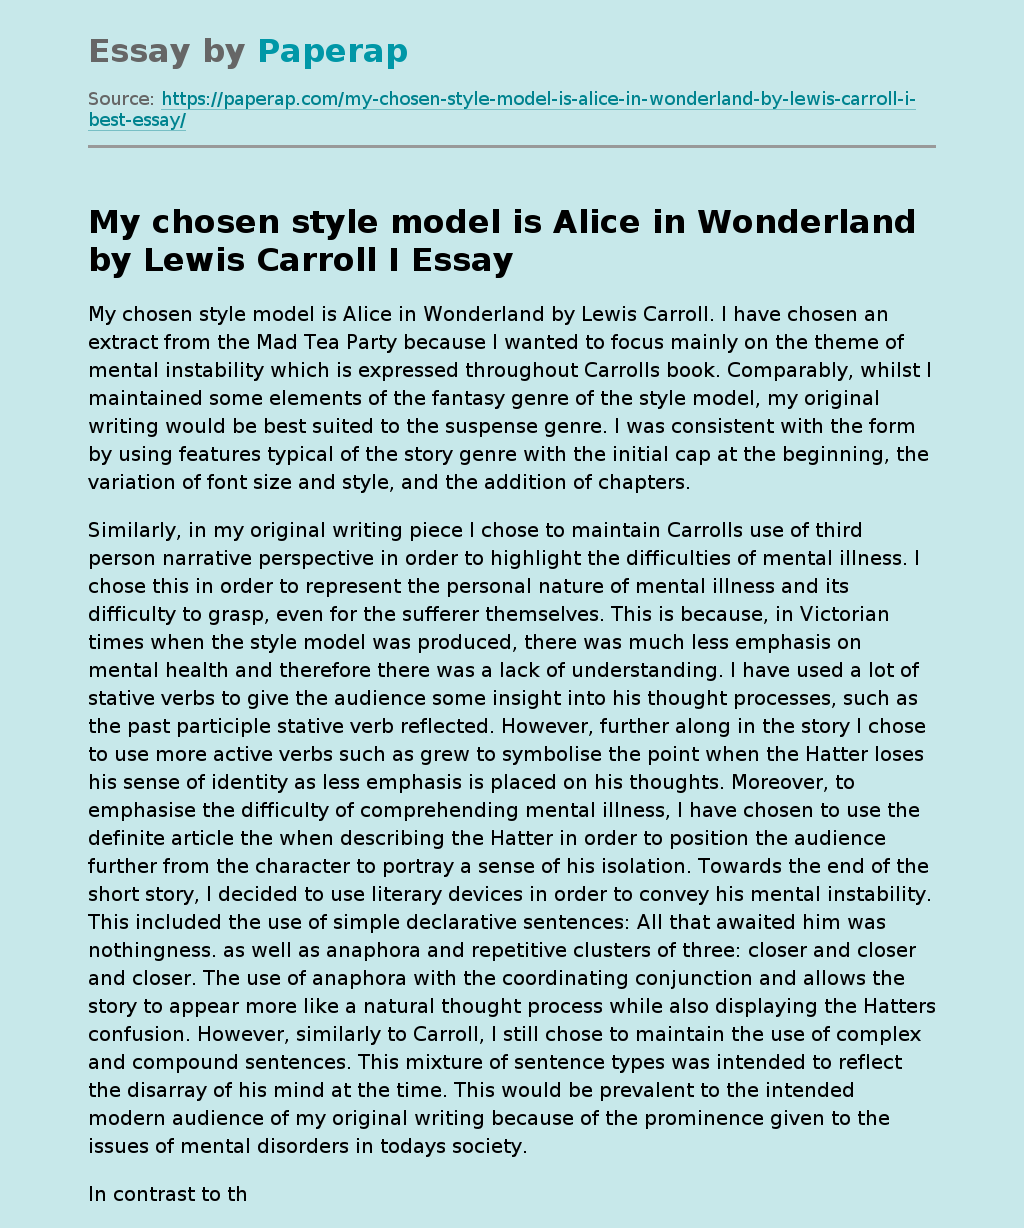 "Alice in Wonderland" by Lewis Carroll